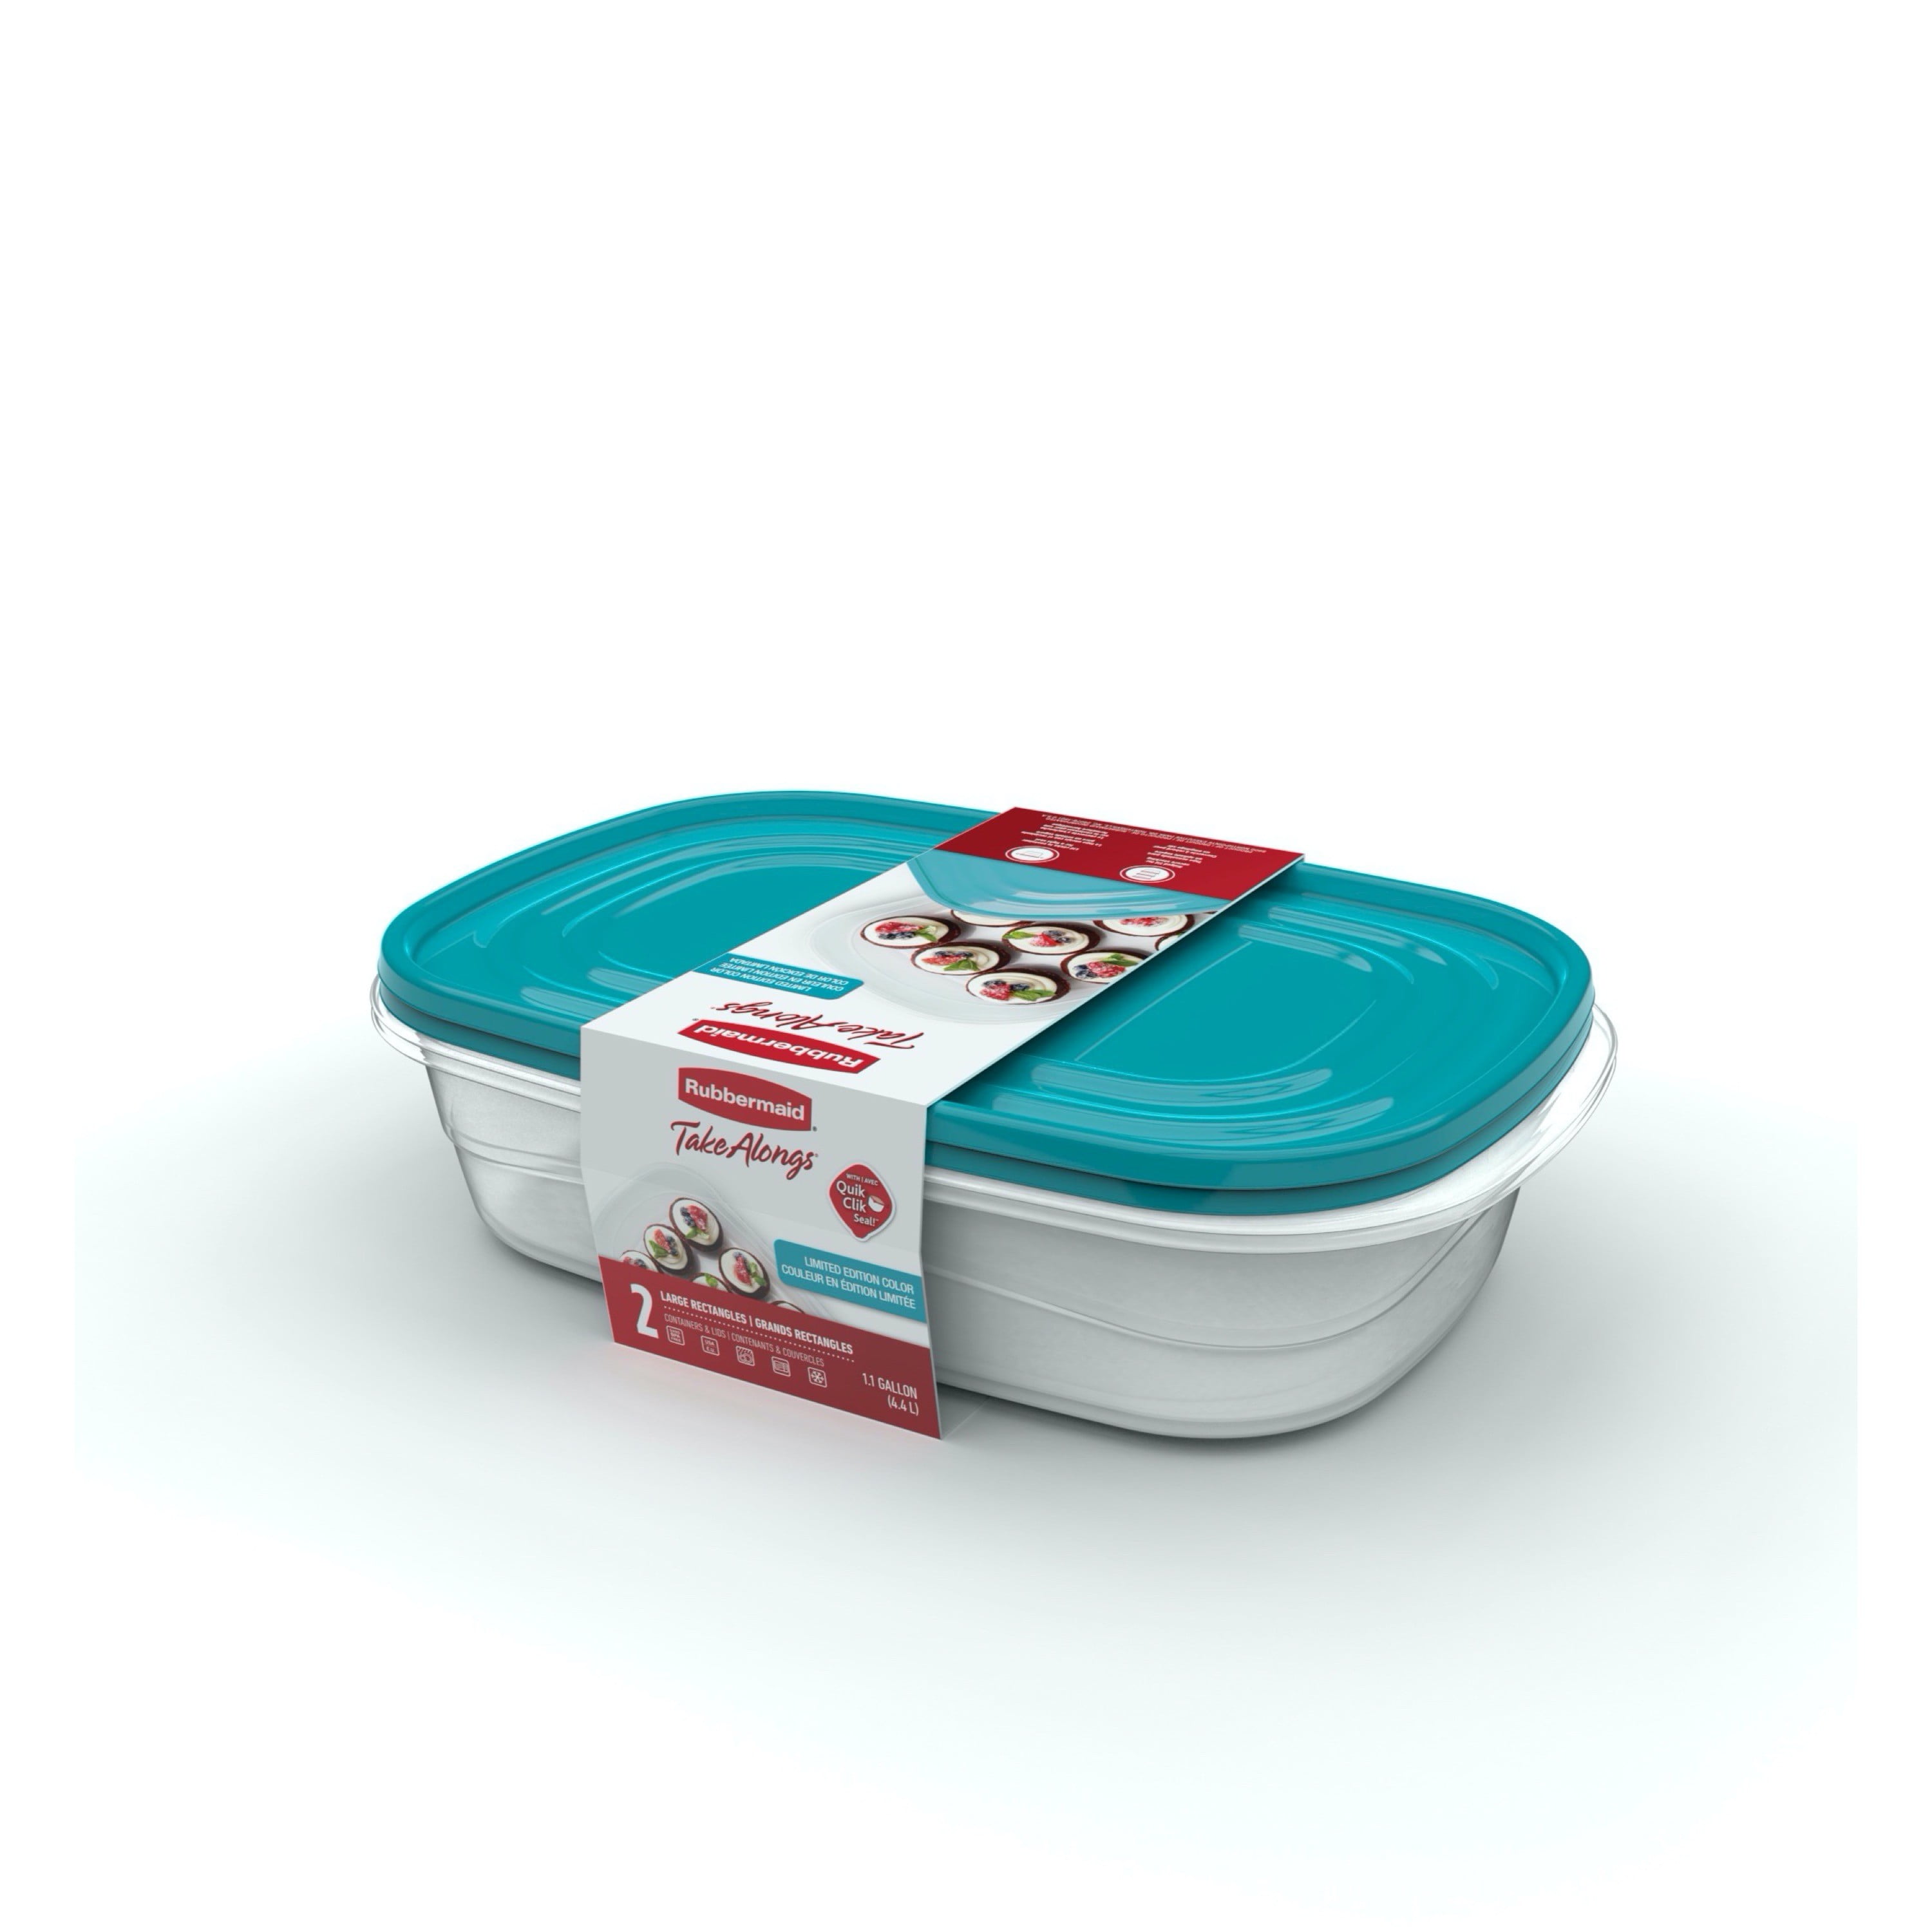 Rubbermaid® Take Alongs Meal Prep Rectangle BPA-Free Plastic Food Storage  Container, 5 pk - Kroger